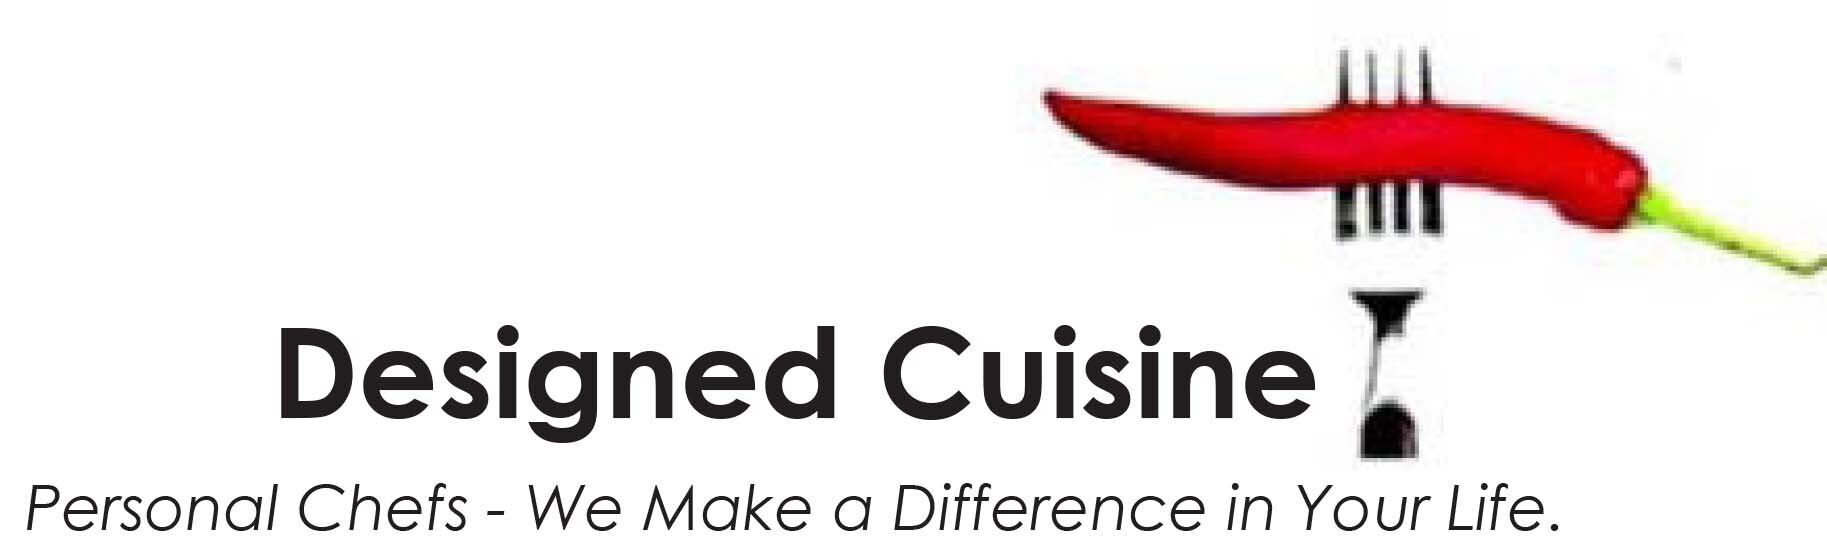 Designed Cuisine, A Personal Chef Service